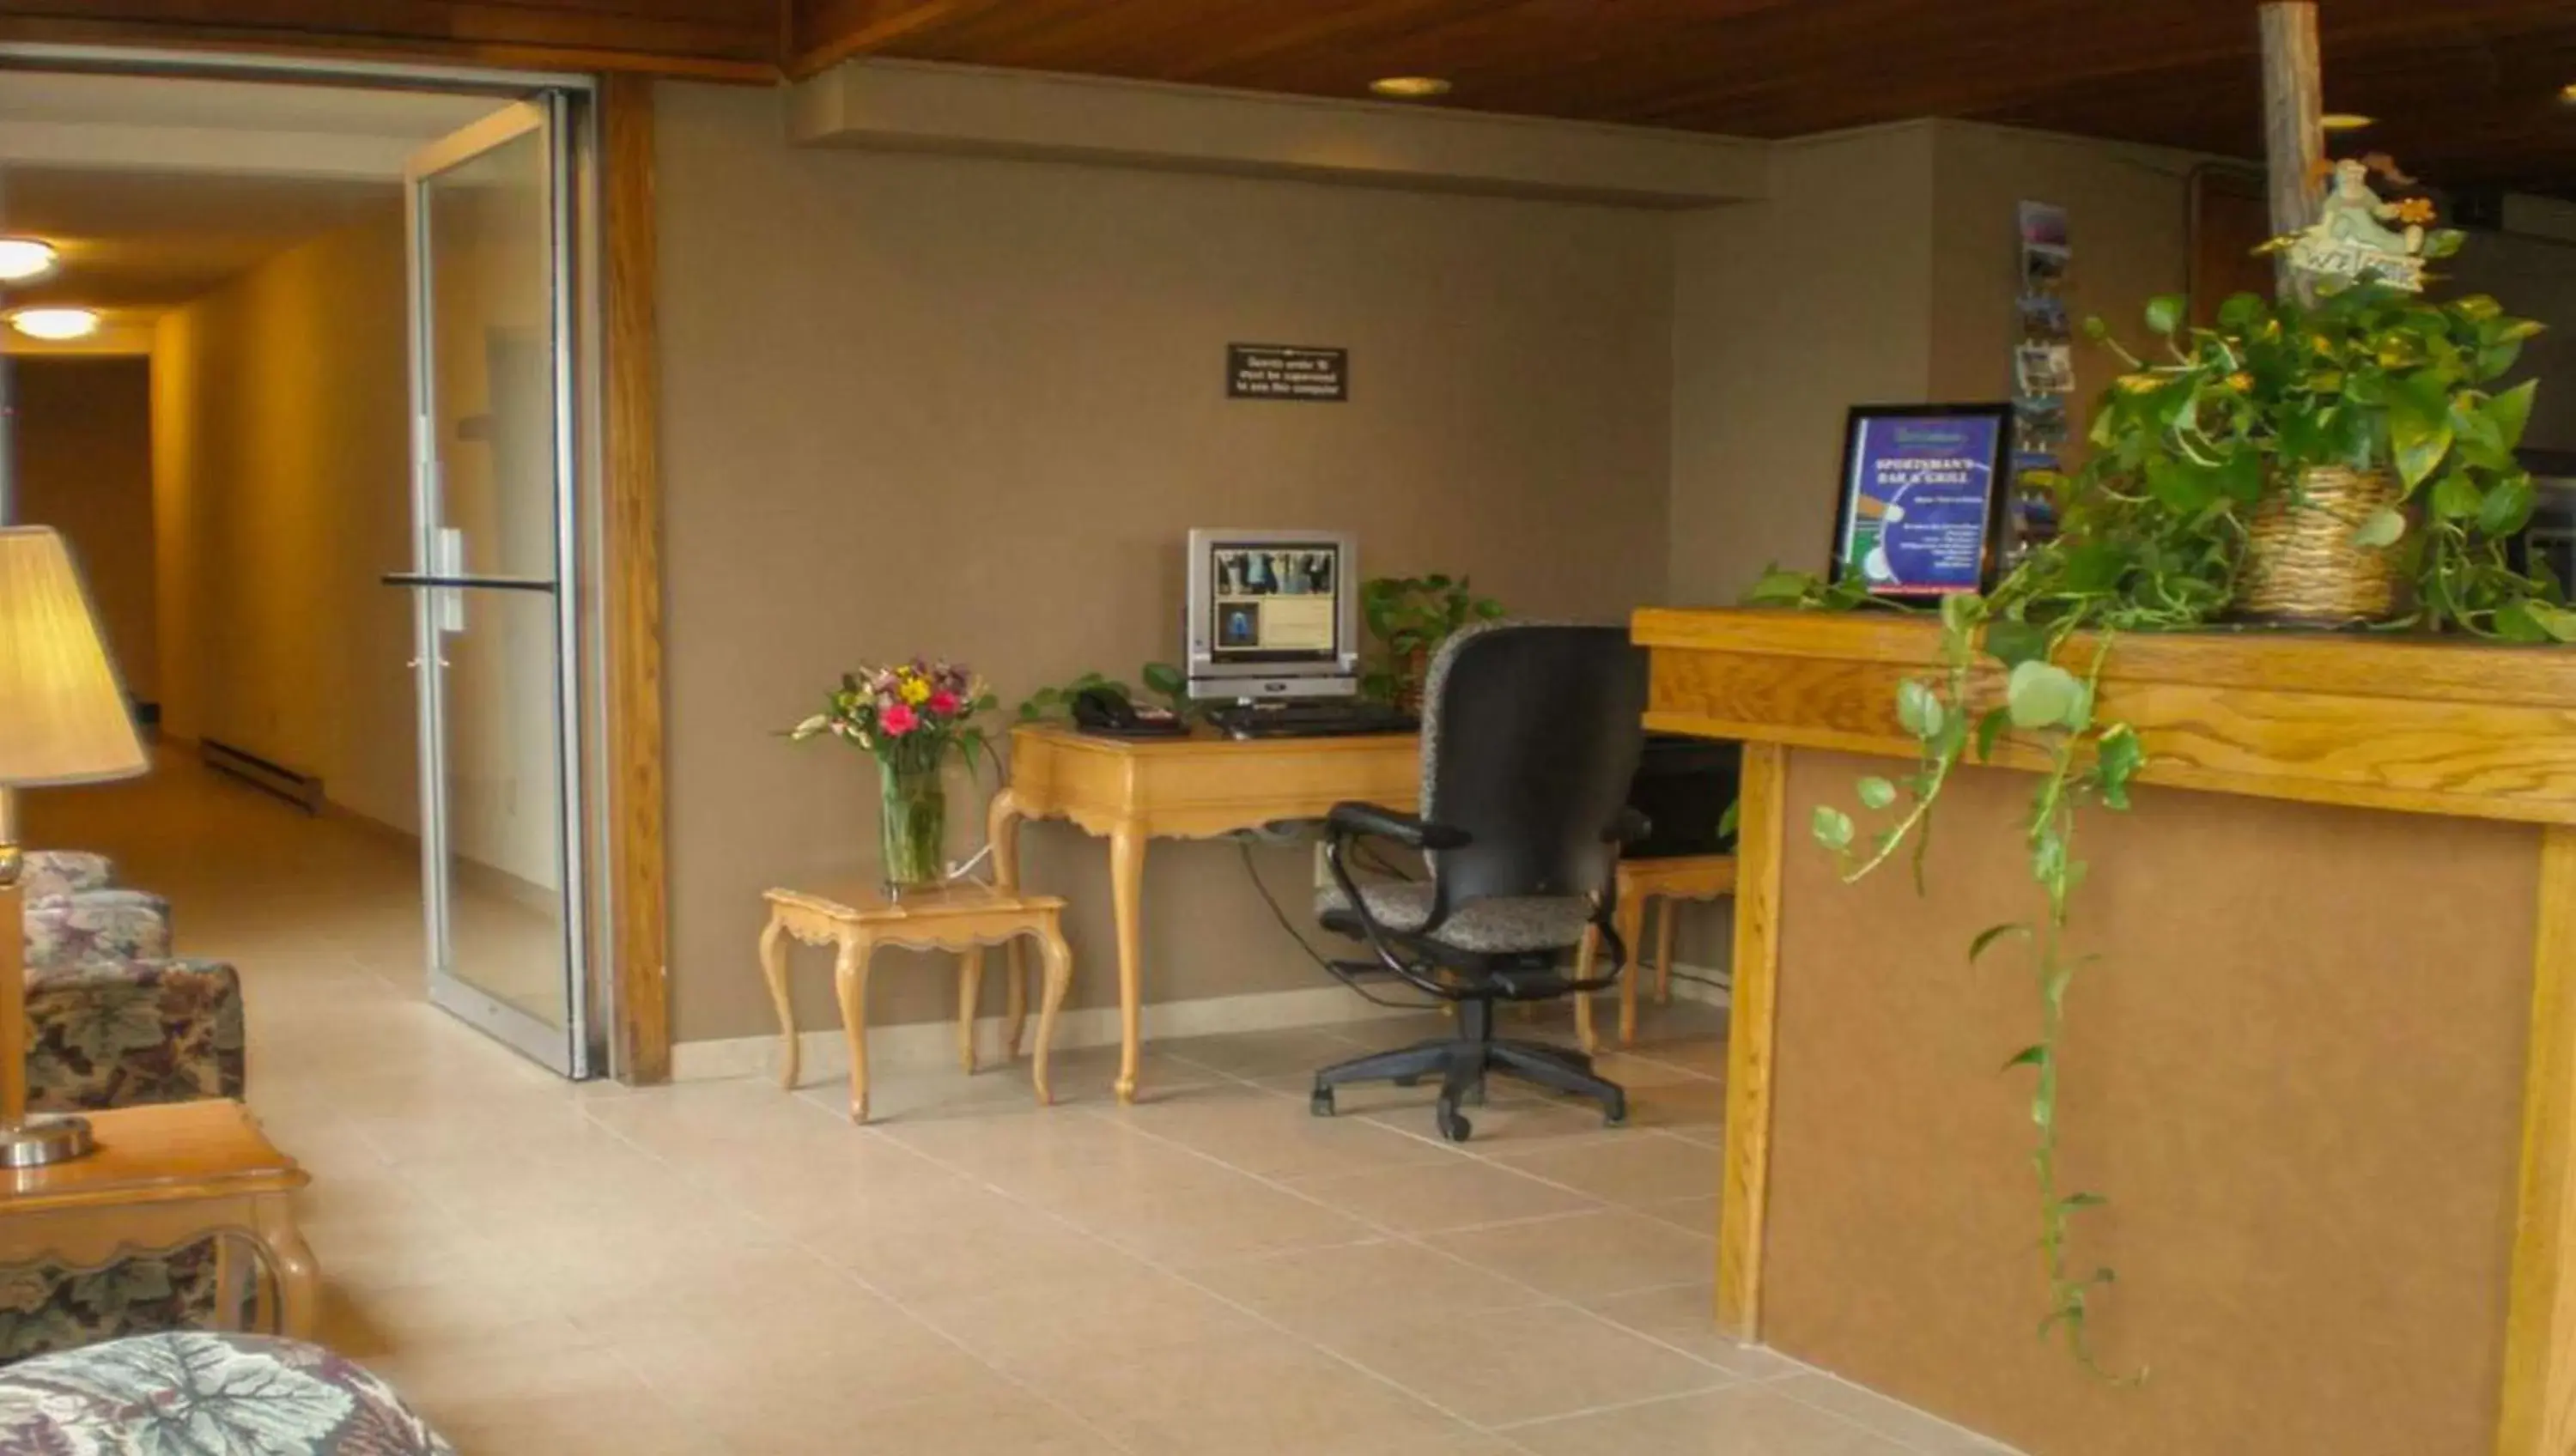 Lobby or reception in The La Grande Inn